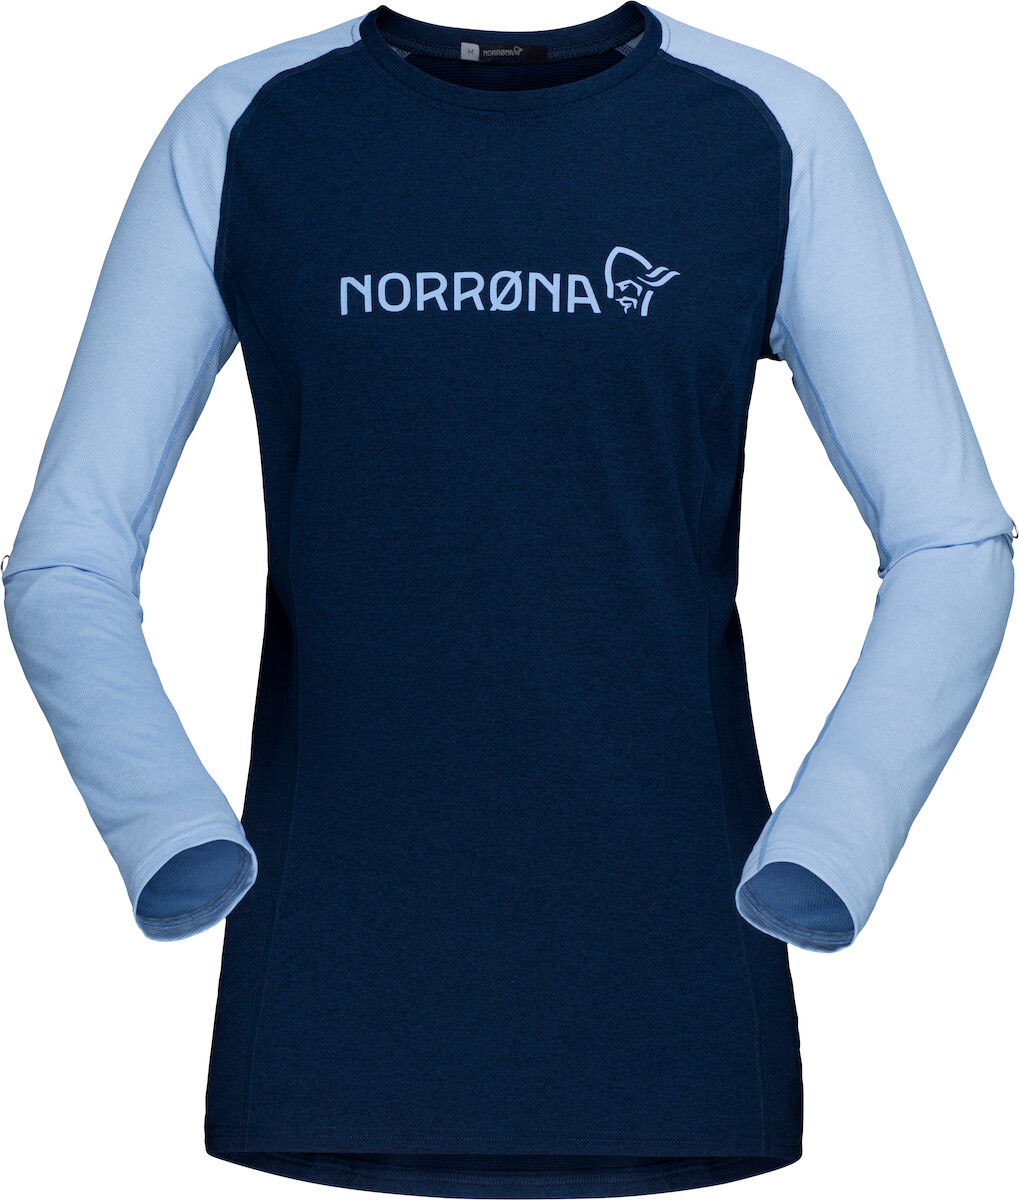 Norrona Fjørå Equaliser Lightweight Long Sleeve - MTB jersey - Women's